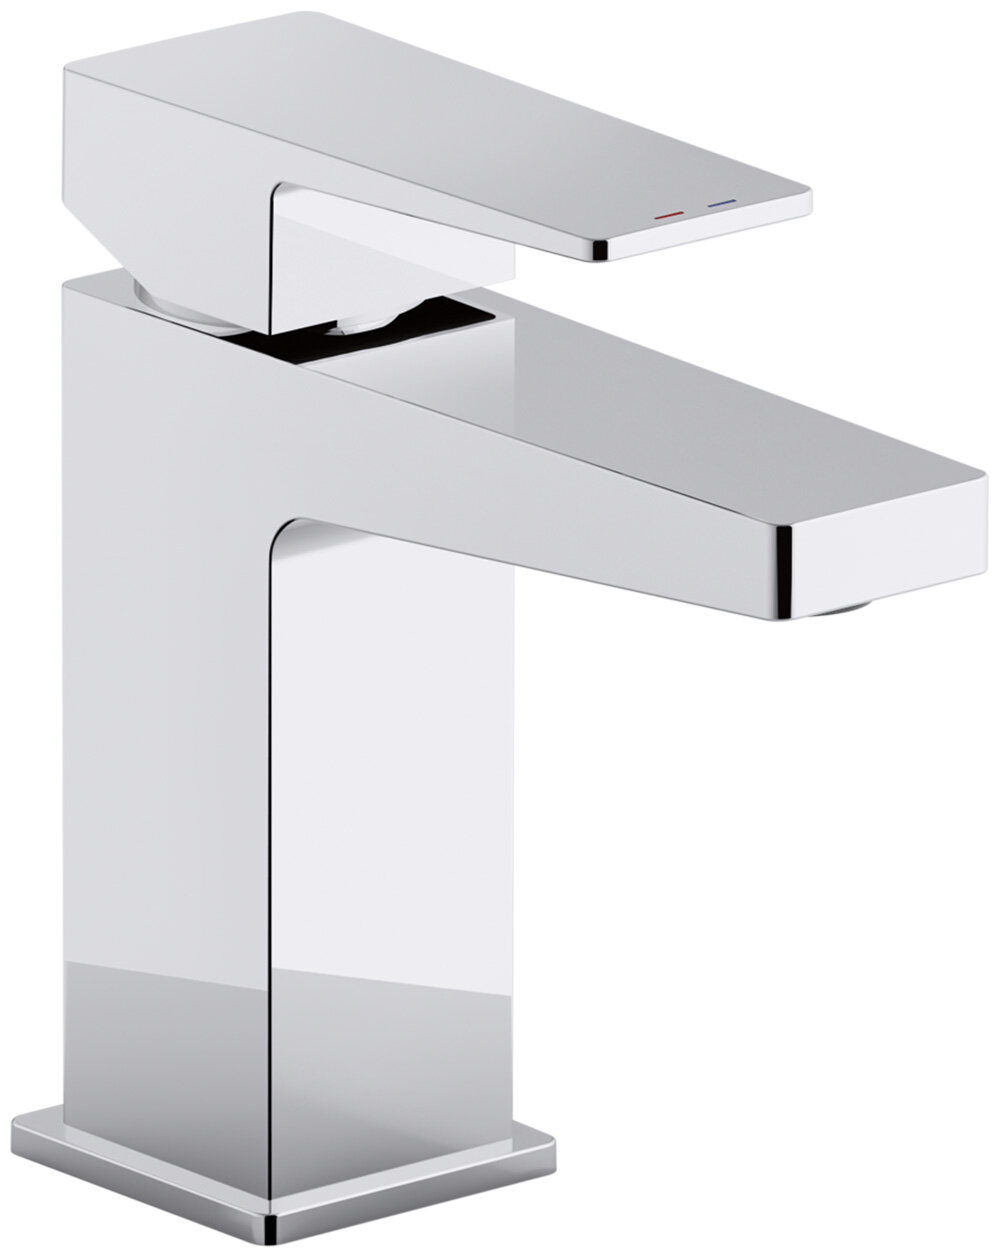 K 99760 4 Cp Kohler Honesty Single Handle Bathroom Sink Faucet With Drain Assembly Reviews Wayfair